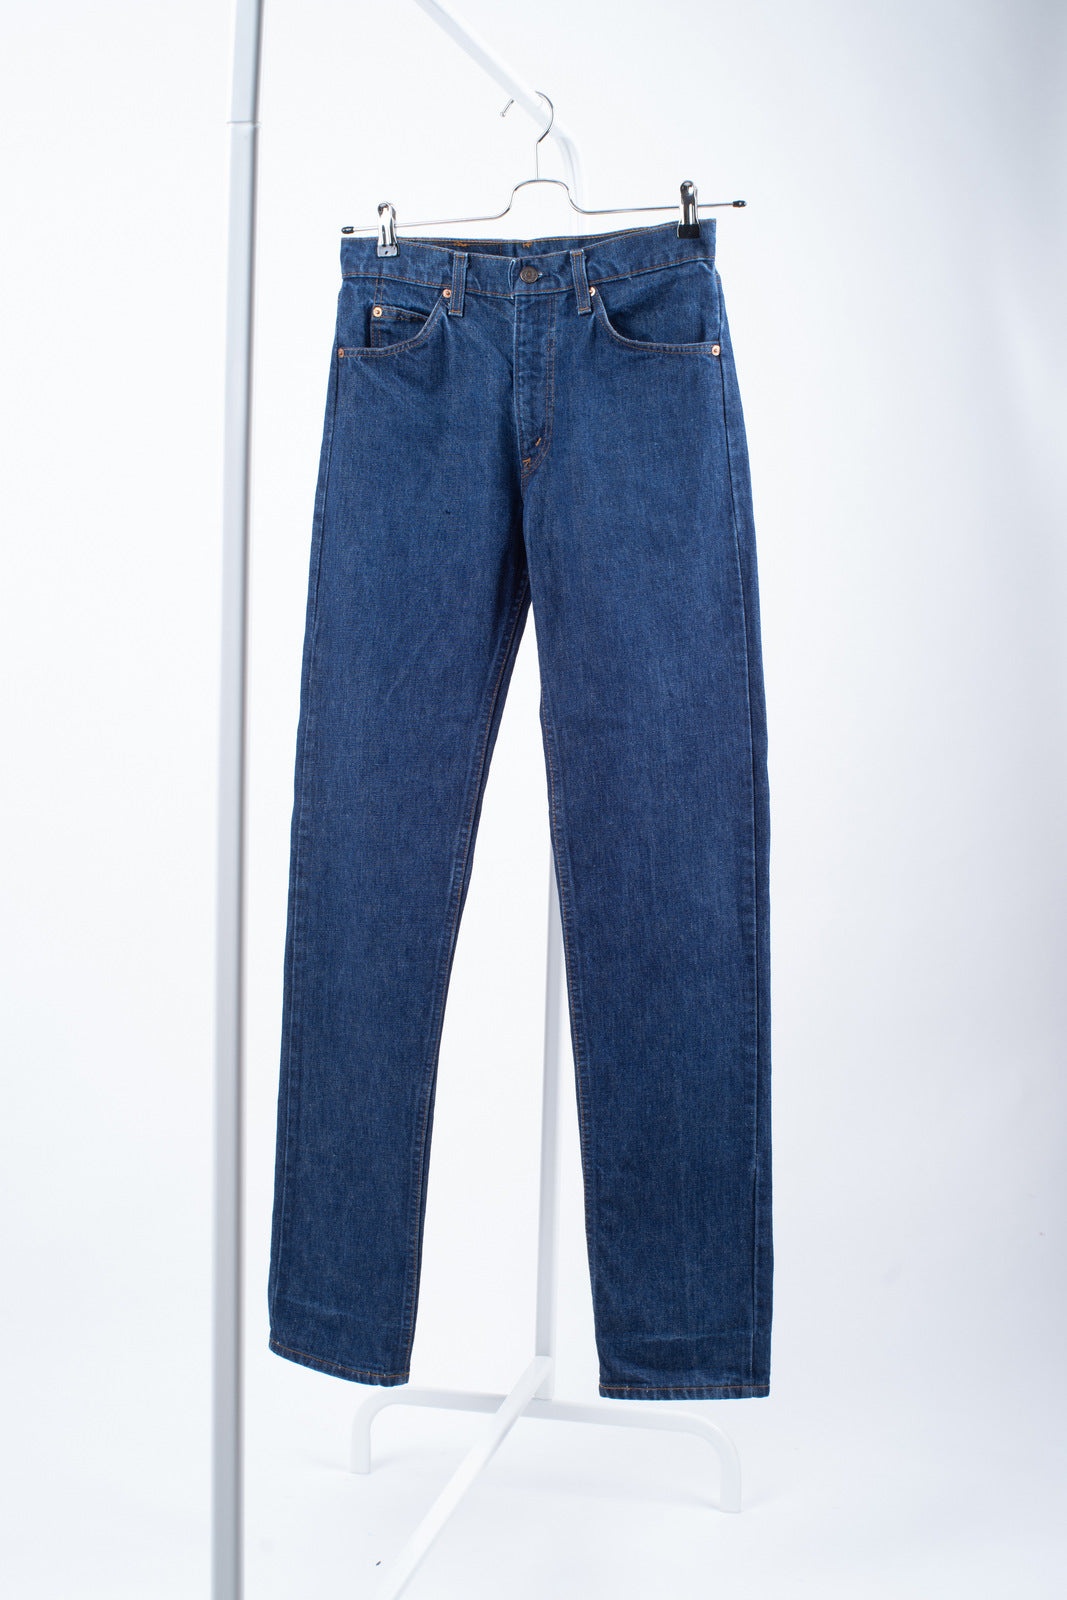 Levi’s 505 Orange Tab Vintage High Waist Jeans Made in USA, W30/L36